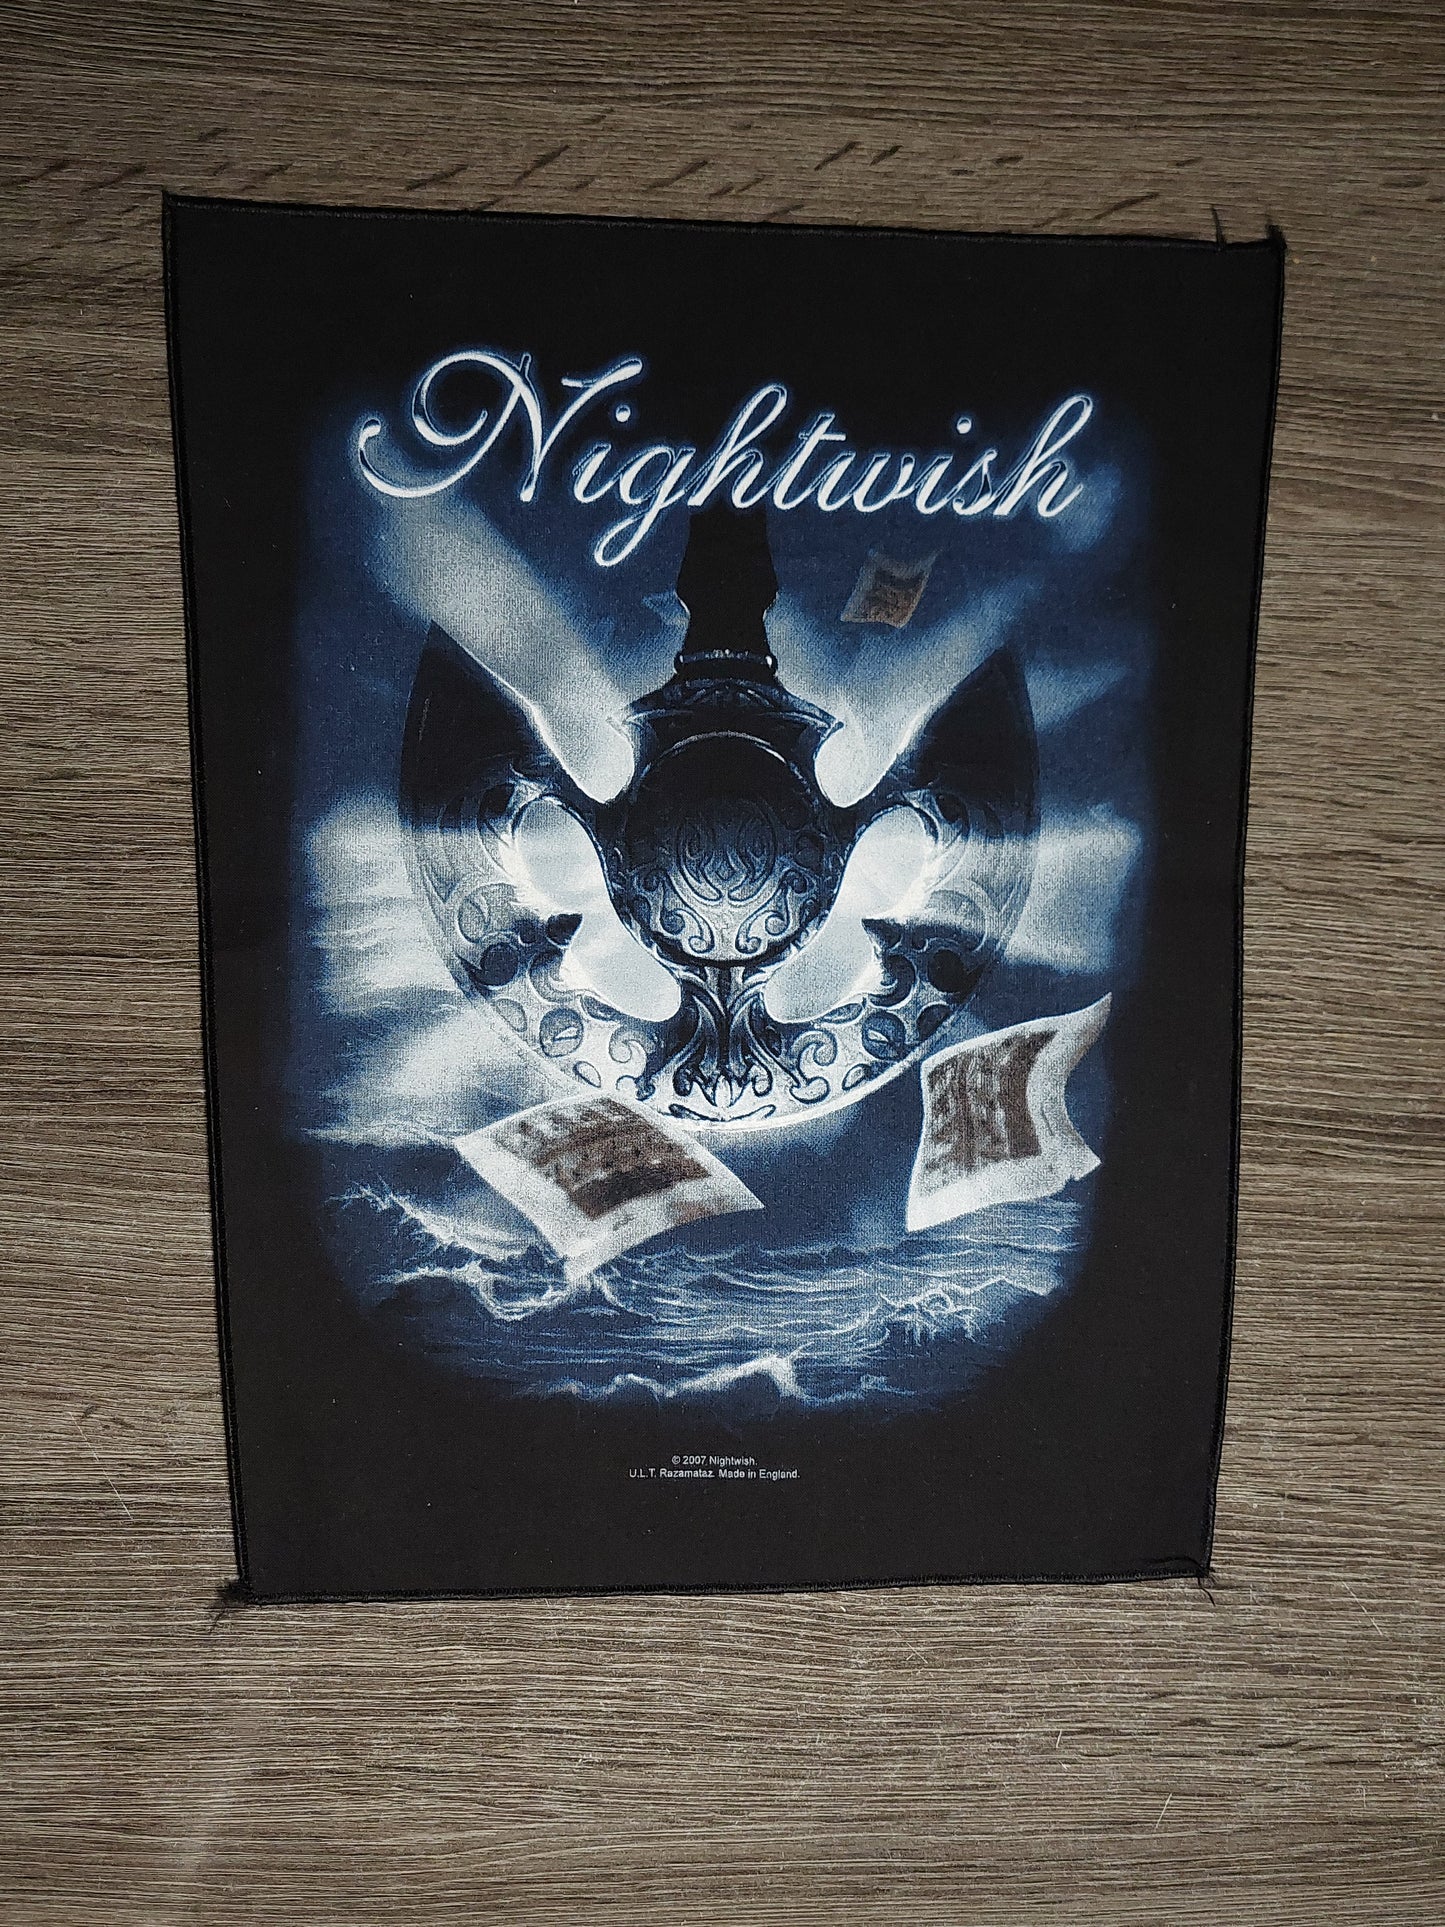 Nightwish - Dark passion play backpatch